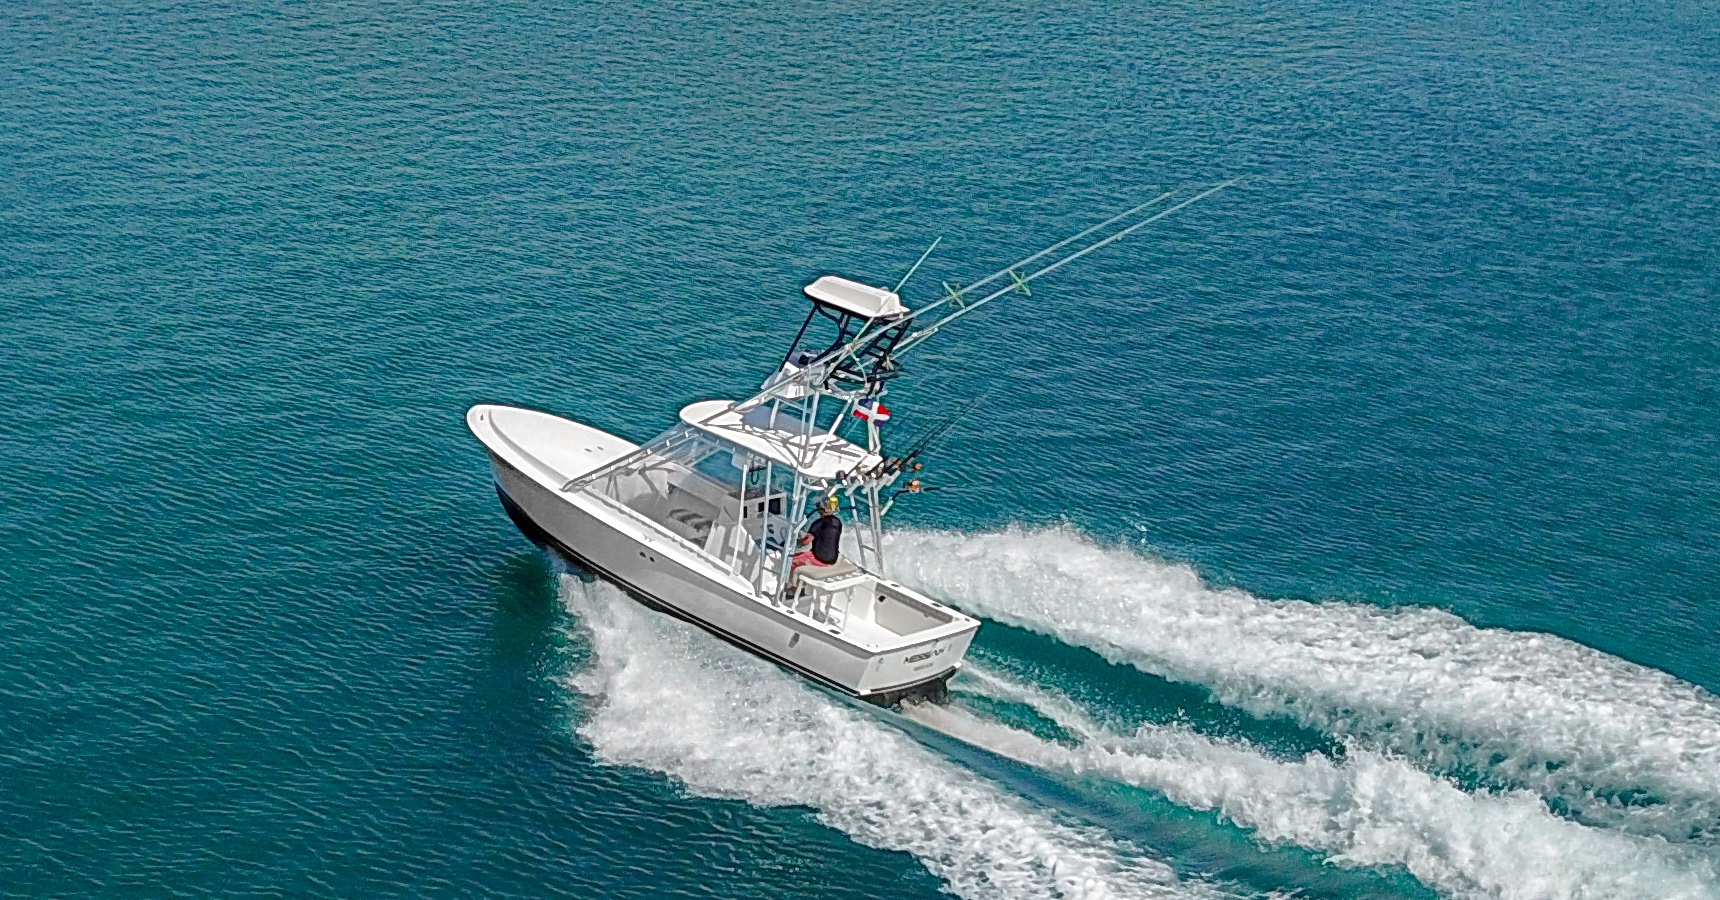 botes - sport fishing boat, strike 26' 
motor cumins 6bta 370 hp
diesel 
bote de pesca  0